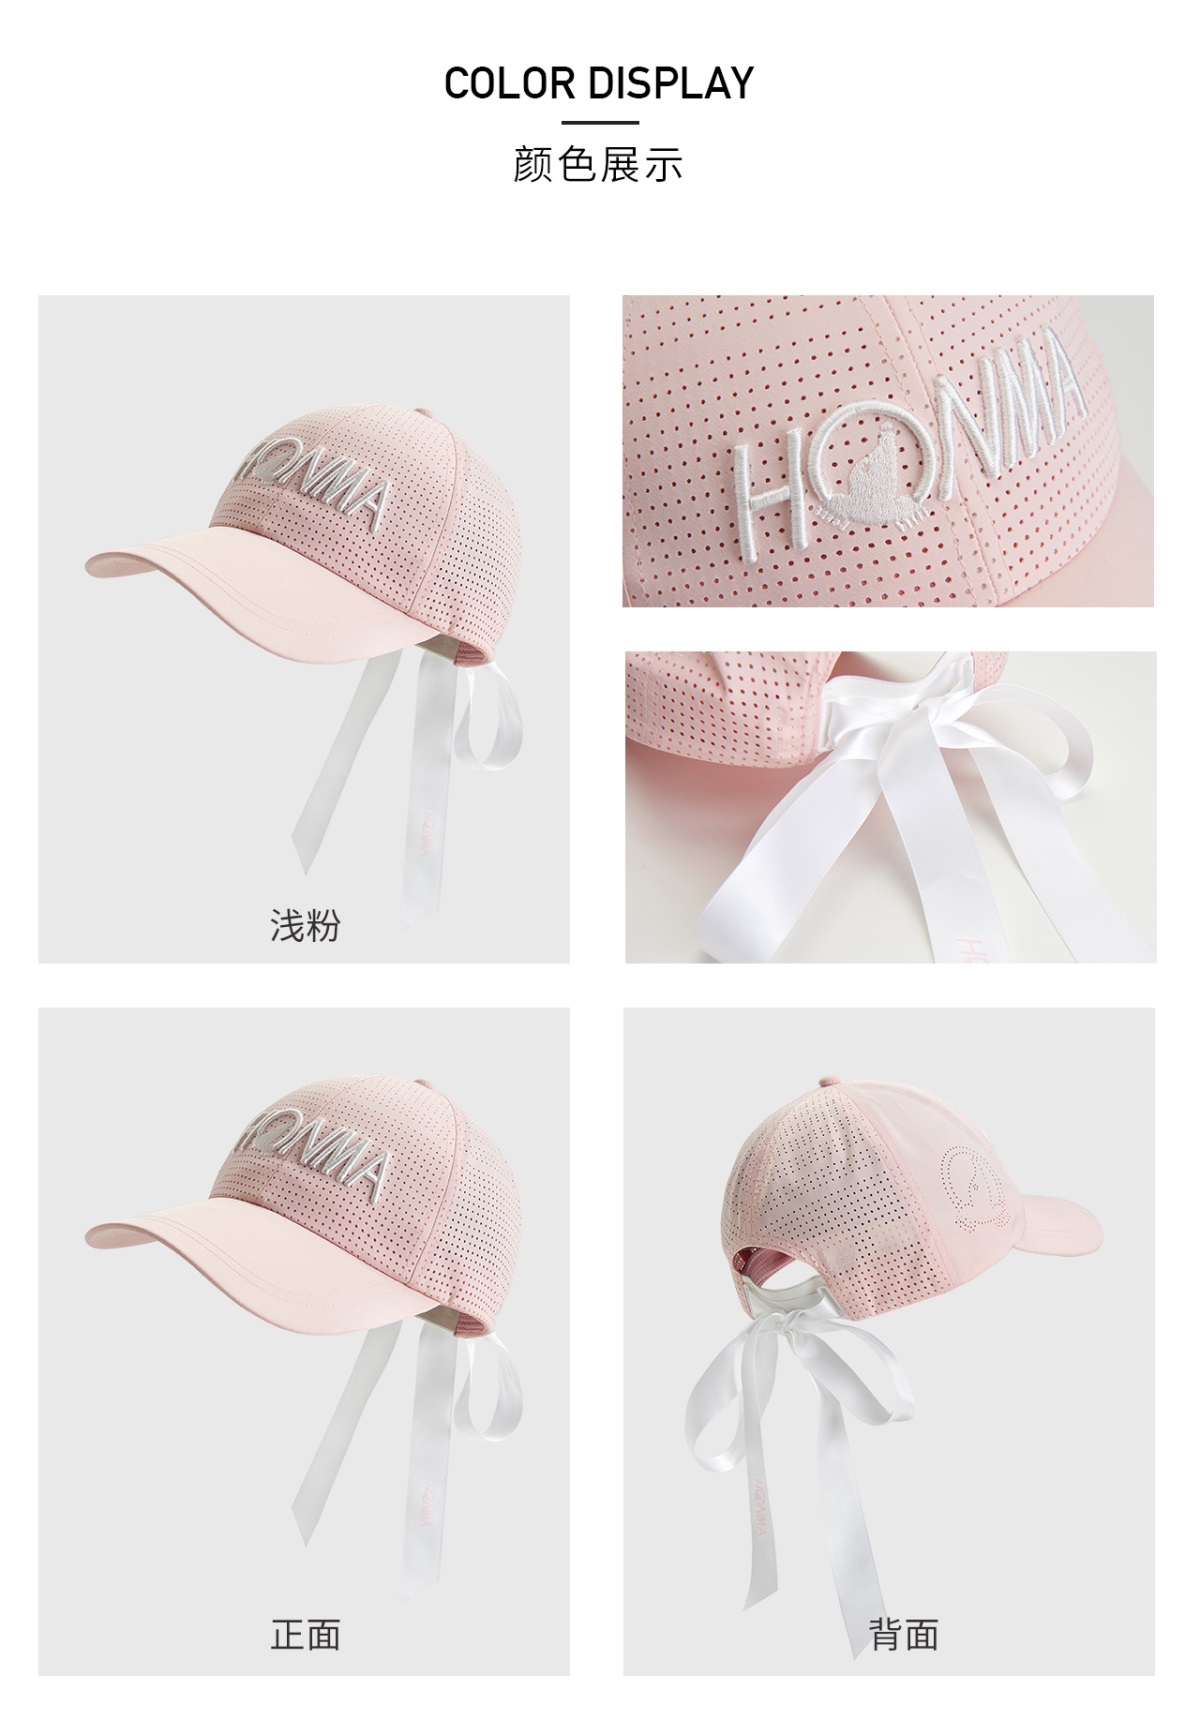 HONMA2021新款高尔夫女子球帽透气网眼冲孔面料蝴蝶结装饰帽扣